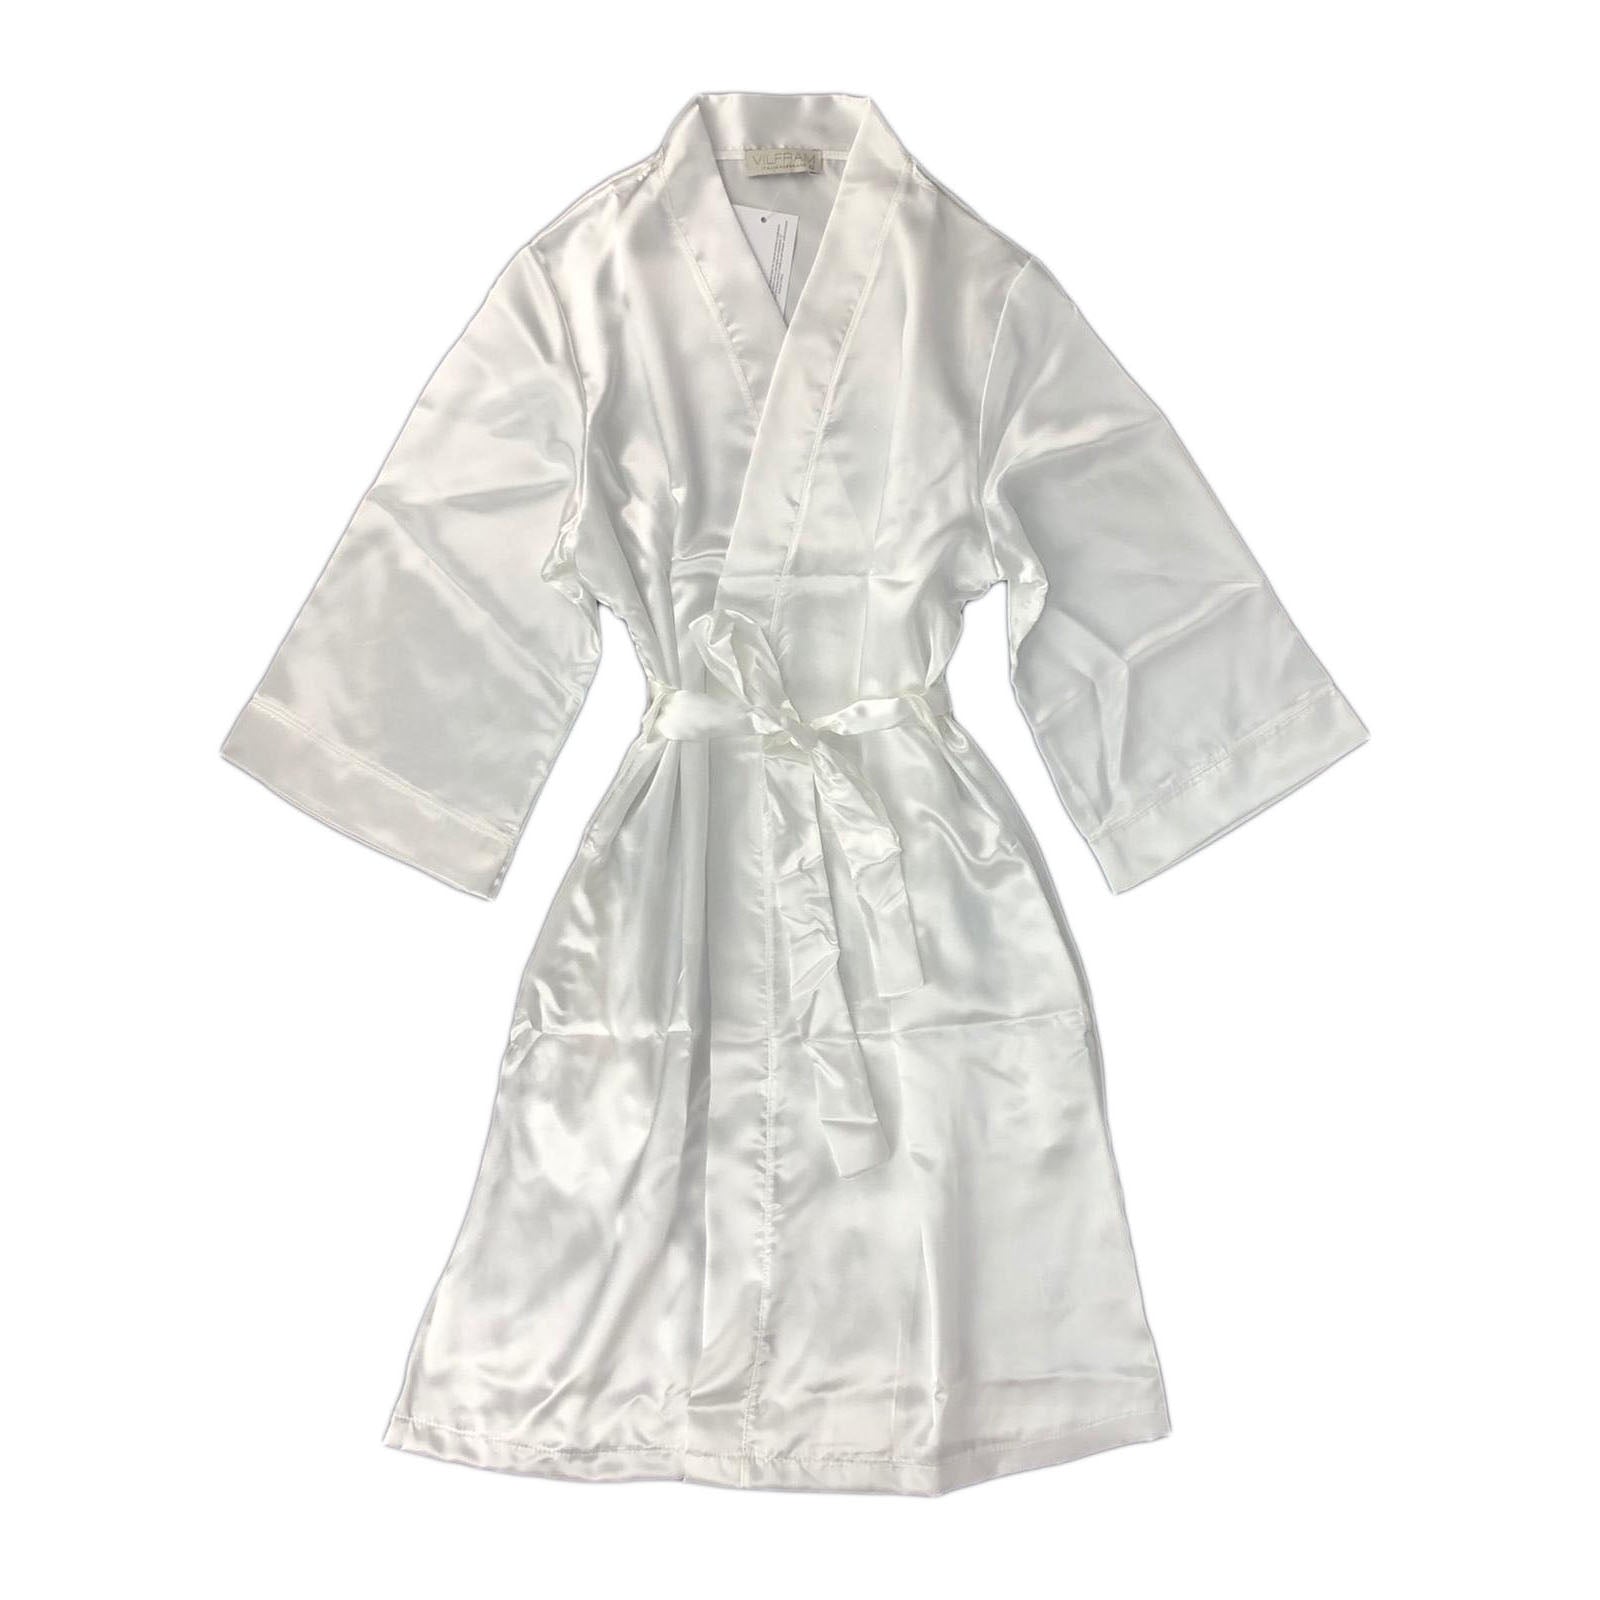 Kimono vestaglia per sposa lingerie donna in raso Vilfram in taglie 42 a 48 0852